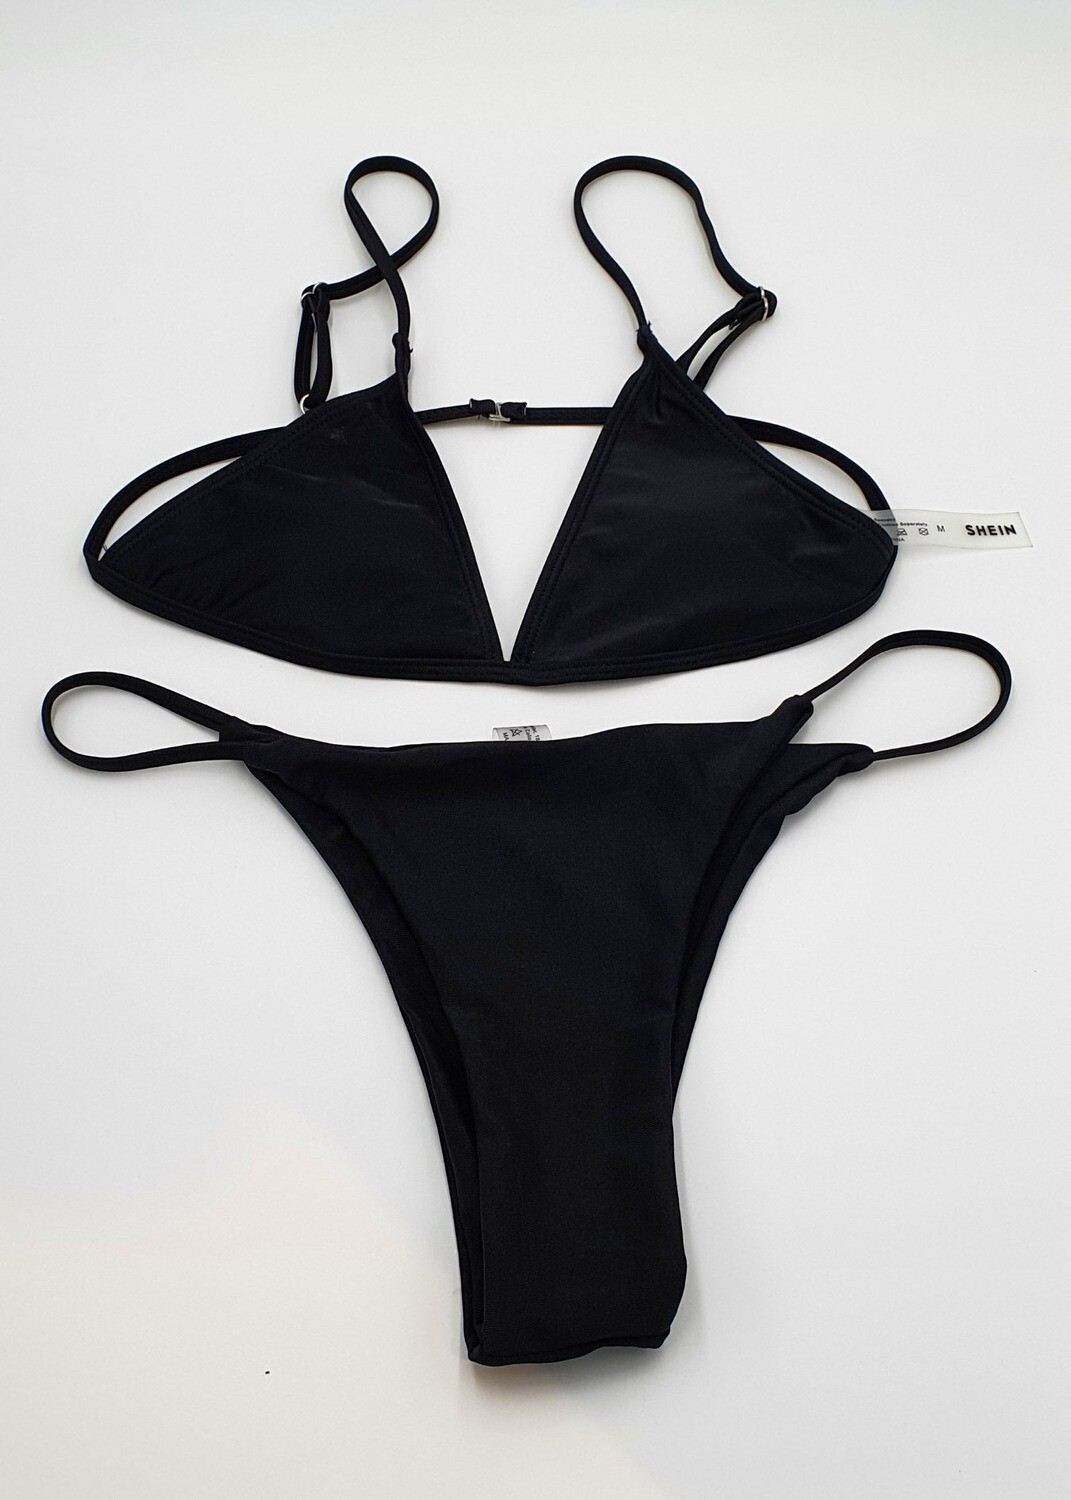 SheIn Damen Bikini-Set Spaghettiträger Hoher Ausschnitt Tanga Bademode zweiteiliger Swimsuit schwarz Gr. M